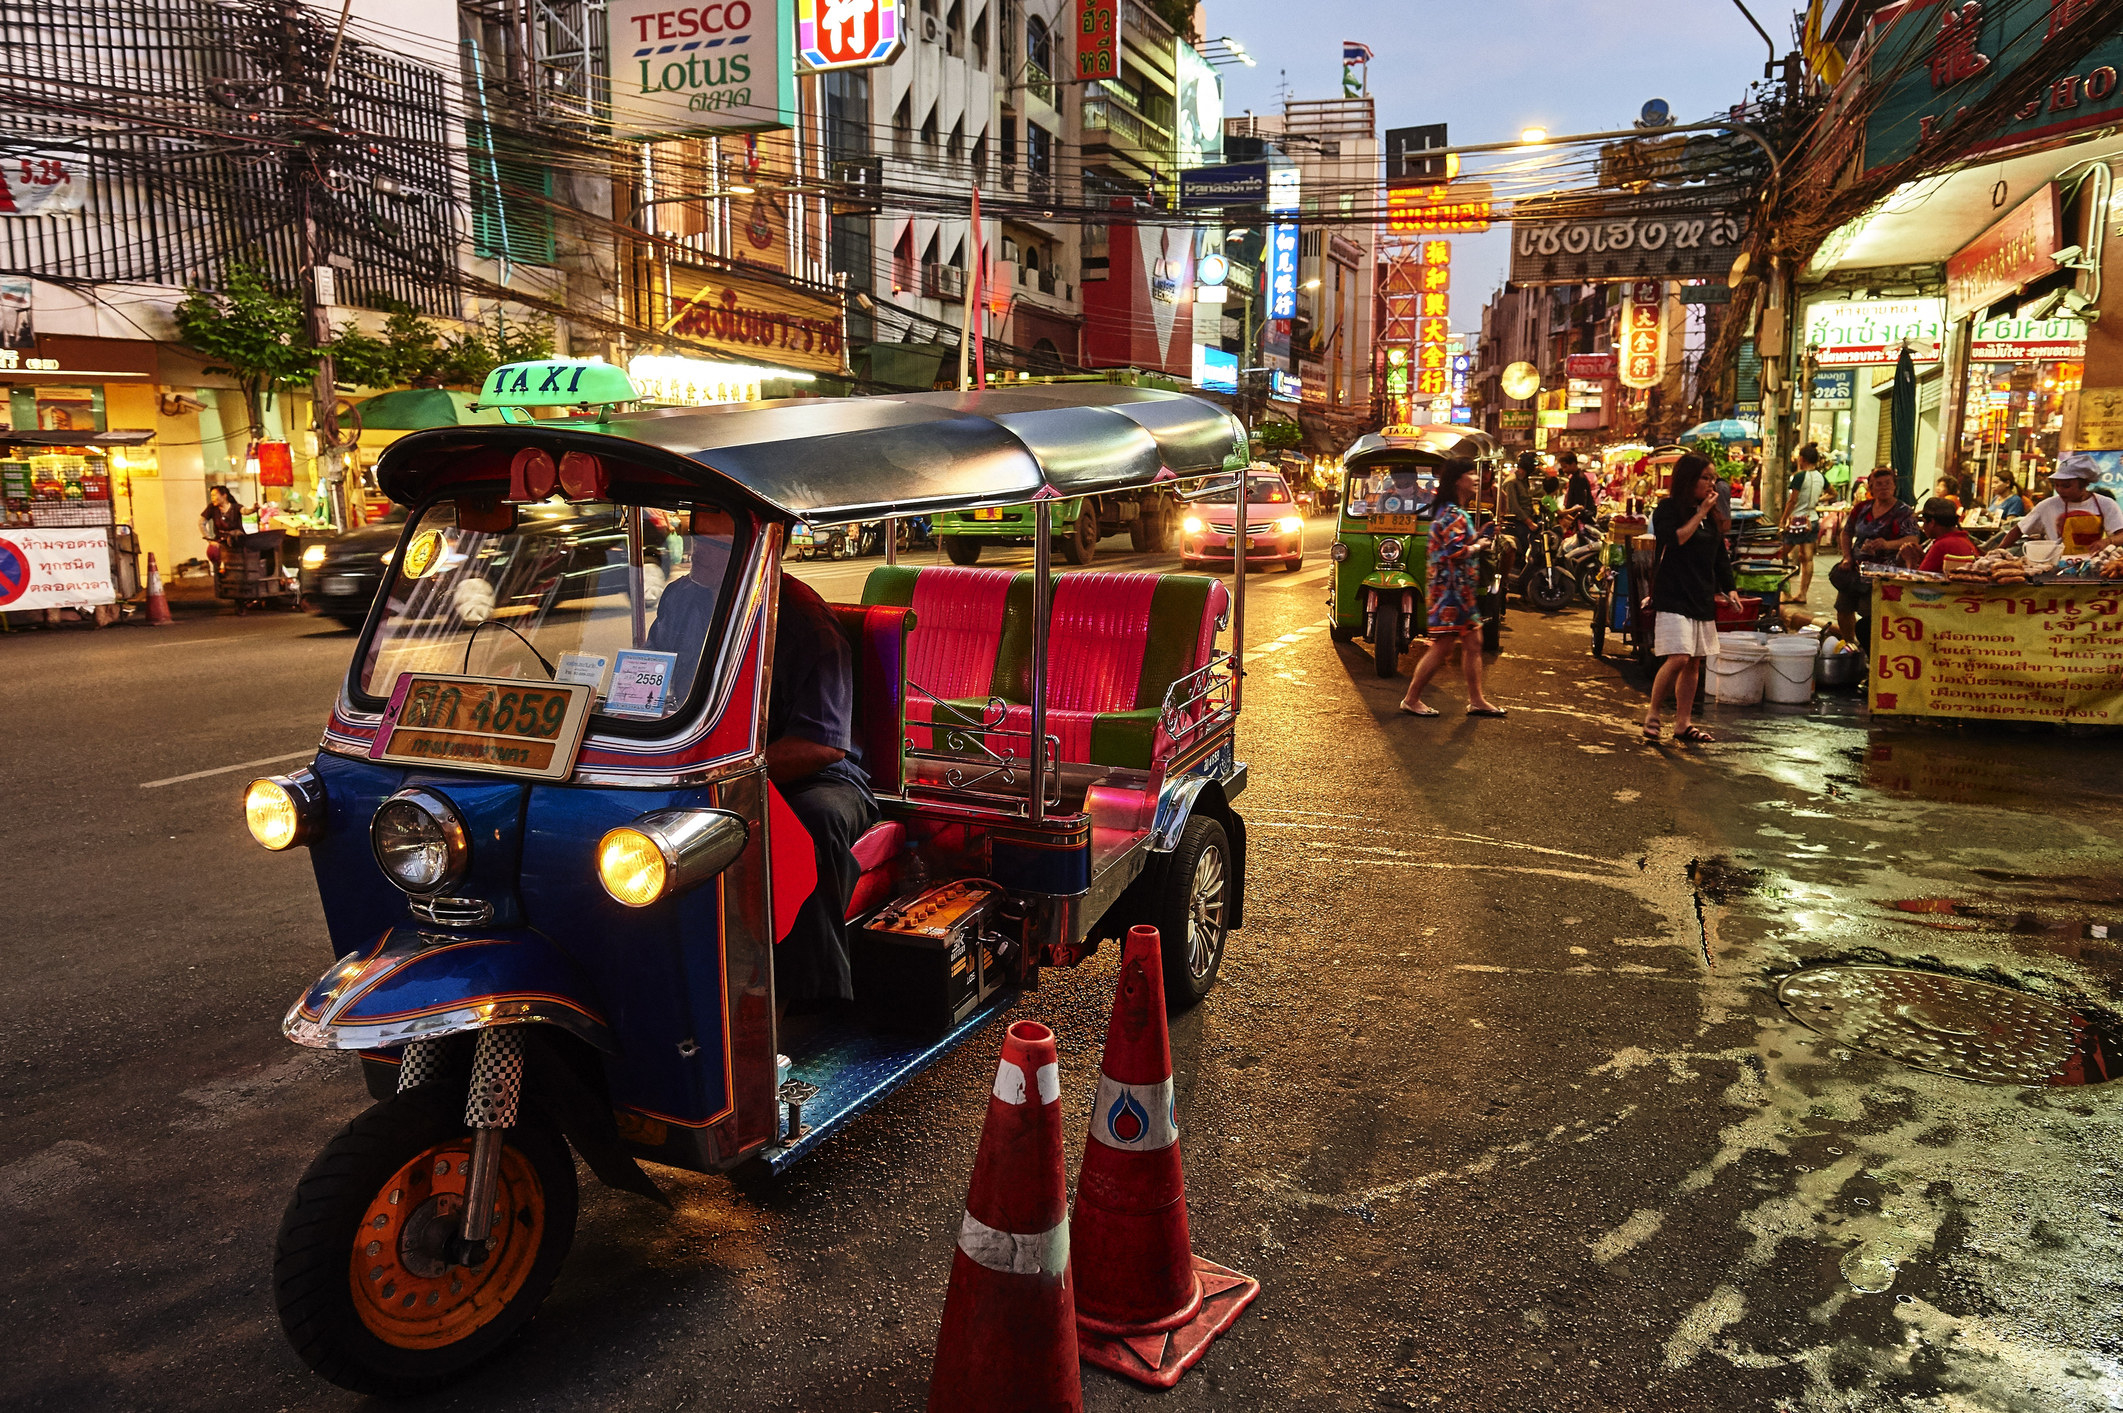 A Tuktuk in Thailand